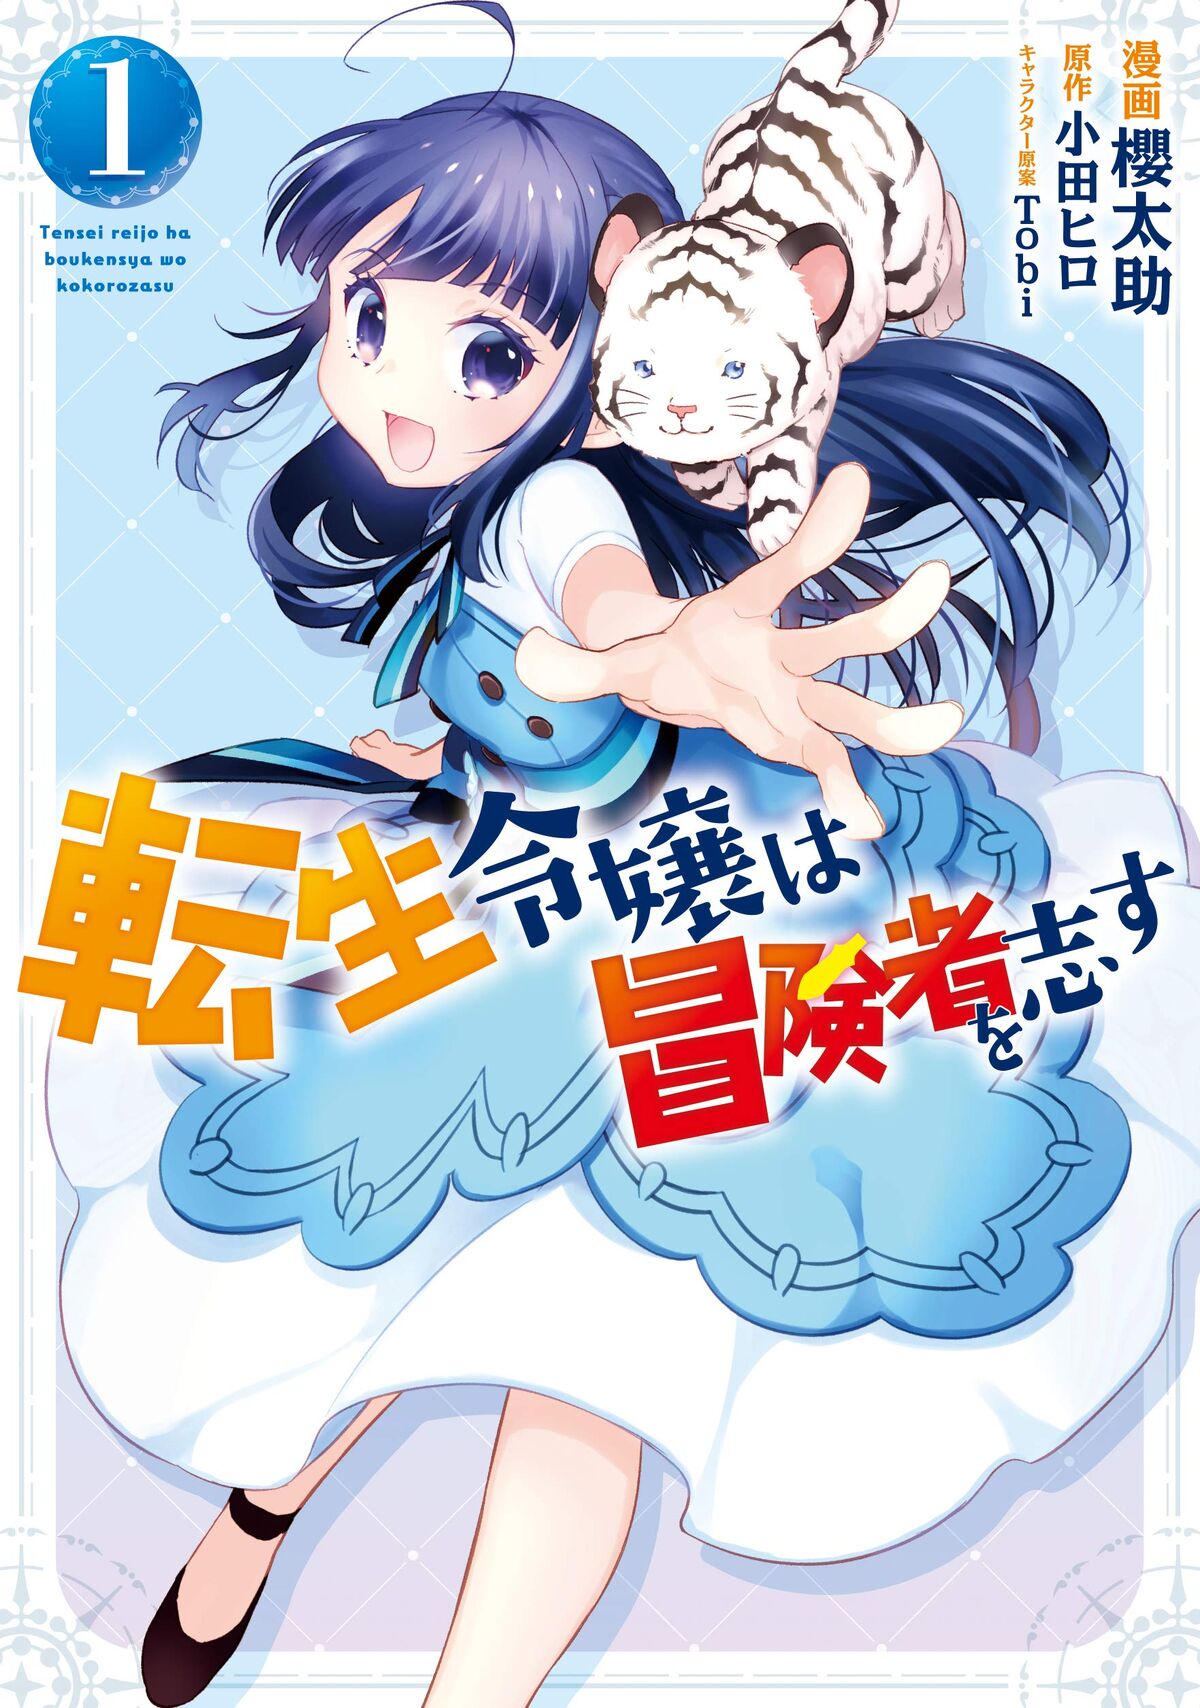 Tensei Kenja wa Musume to Kurasu Image by Kabocha #2570329 - Zerochan Anime  Image Board